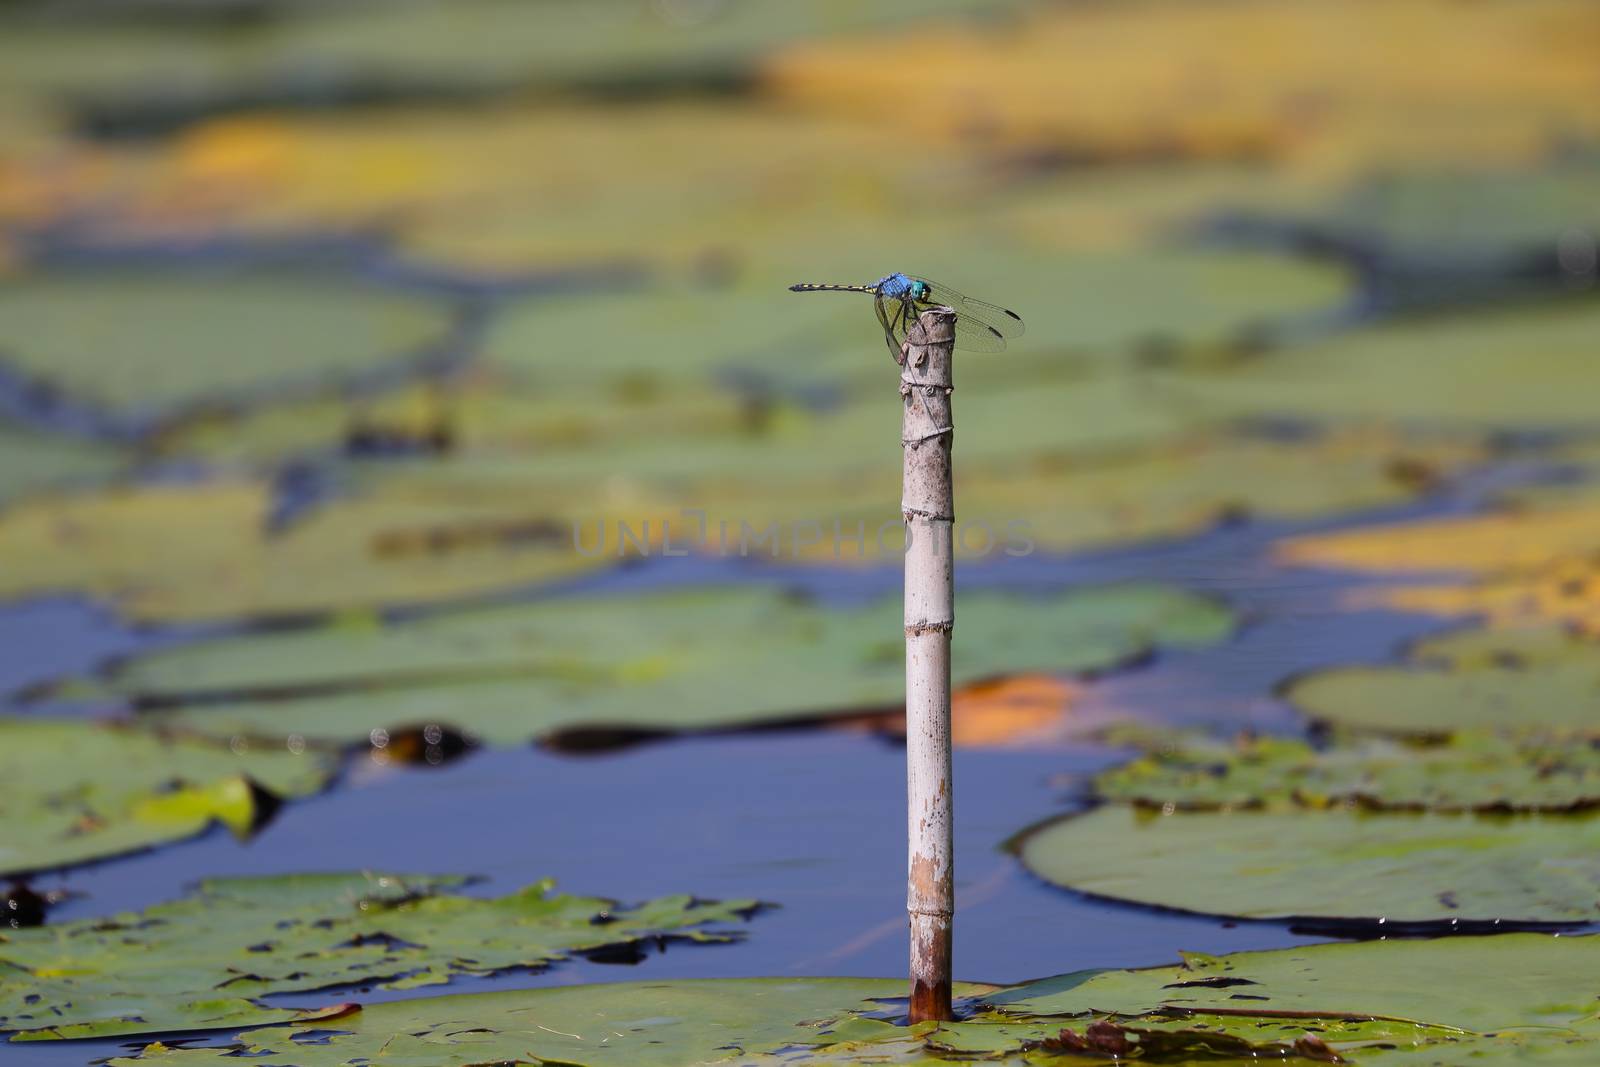 Jaunty Dropwing Dragonfly Perched In Pond (Trithemis stictica) by jjvanginkel